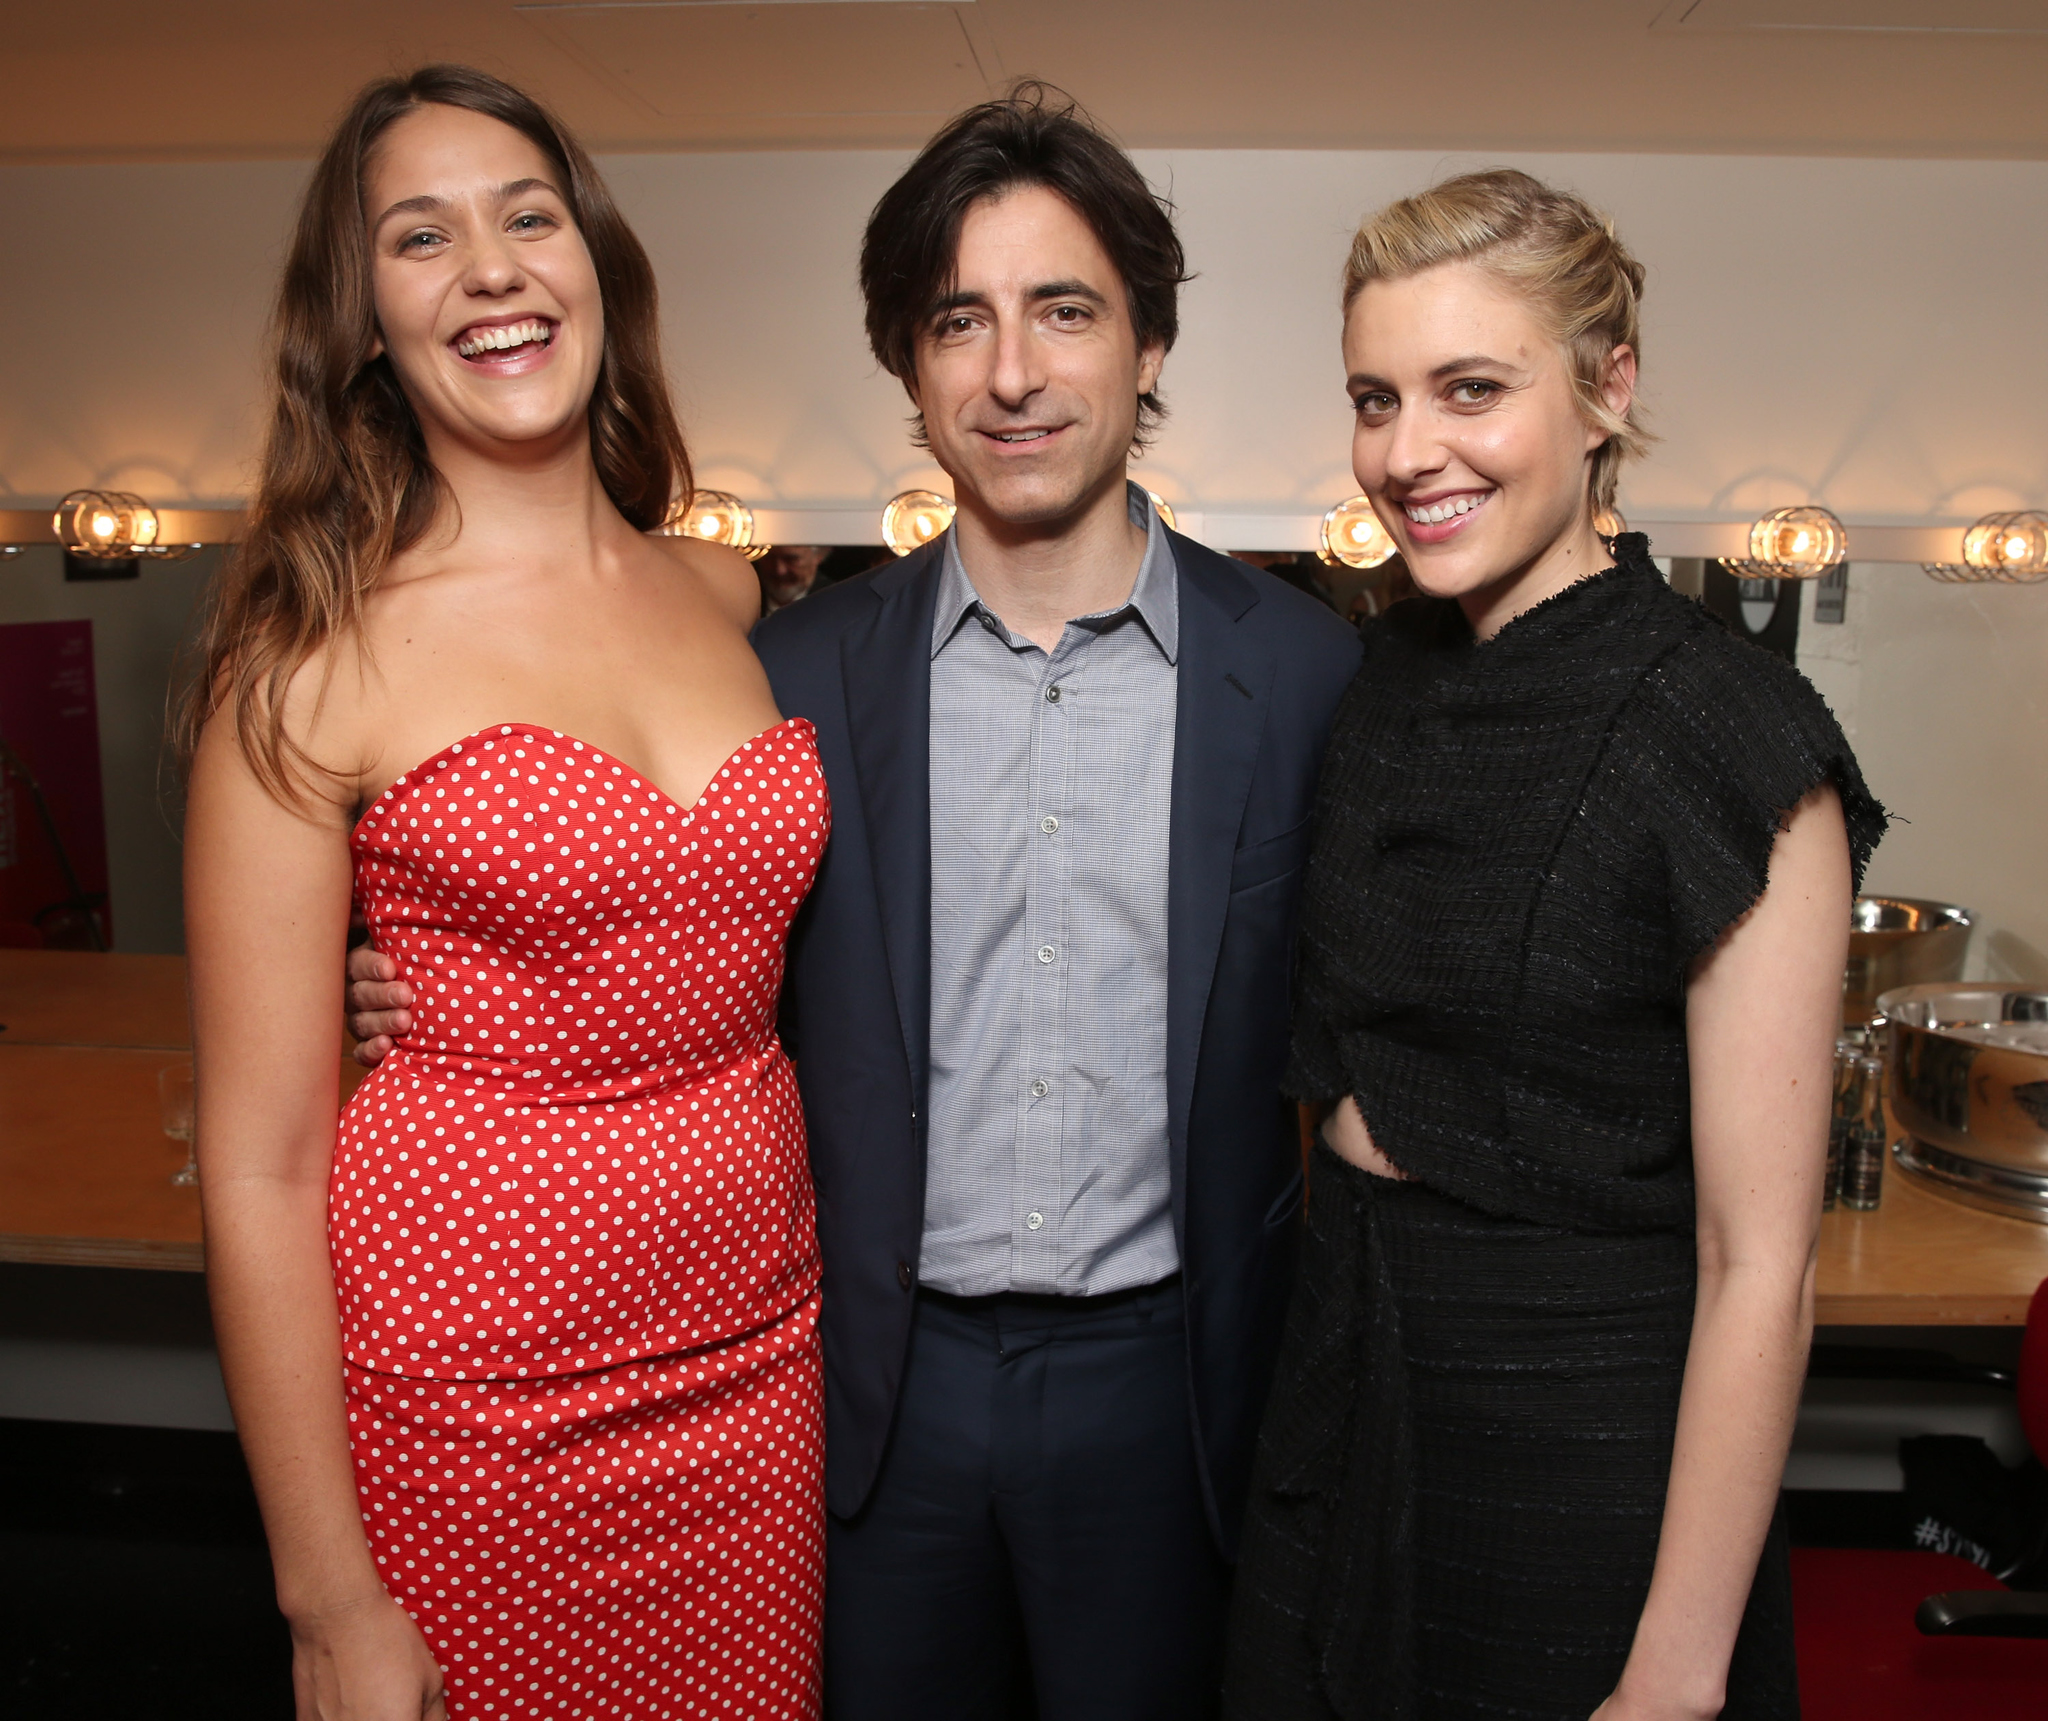 Noah Baumbach, Greta Gerwig and Lola Kirke at event of Mistress America (2015)